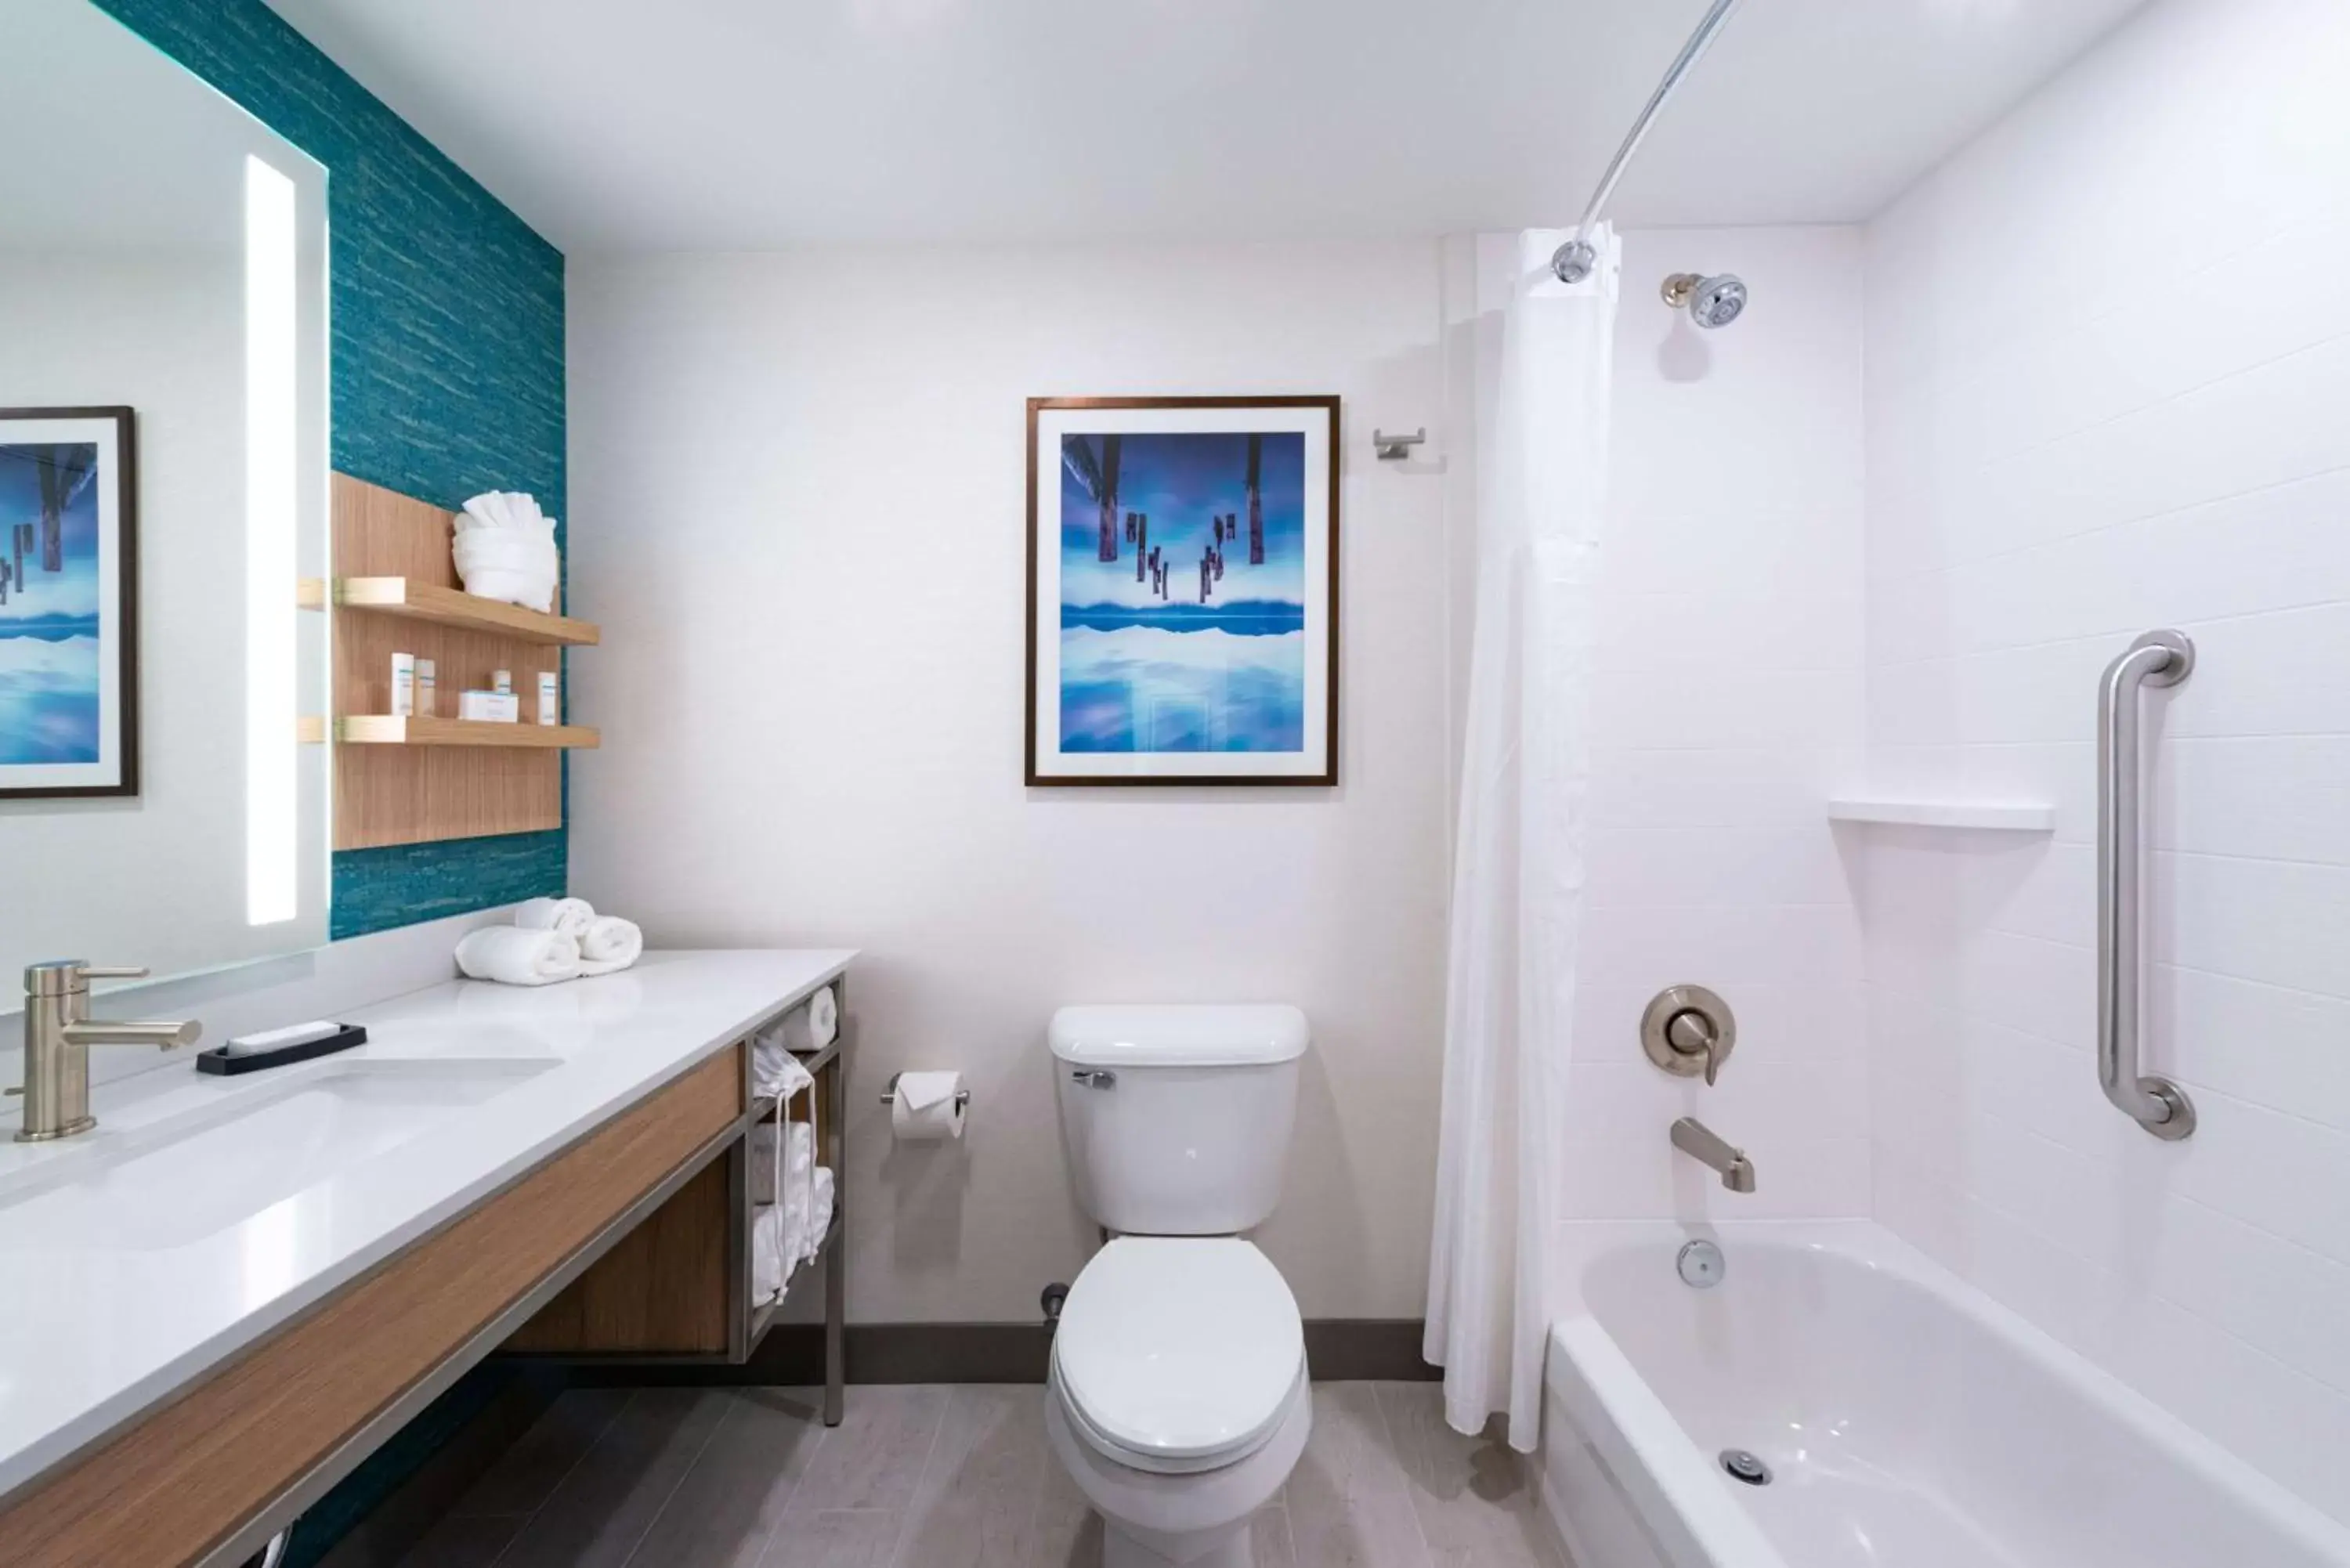 Bathroom in Hilton Garden Inn Seattle Lynnwood, Wa